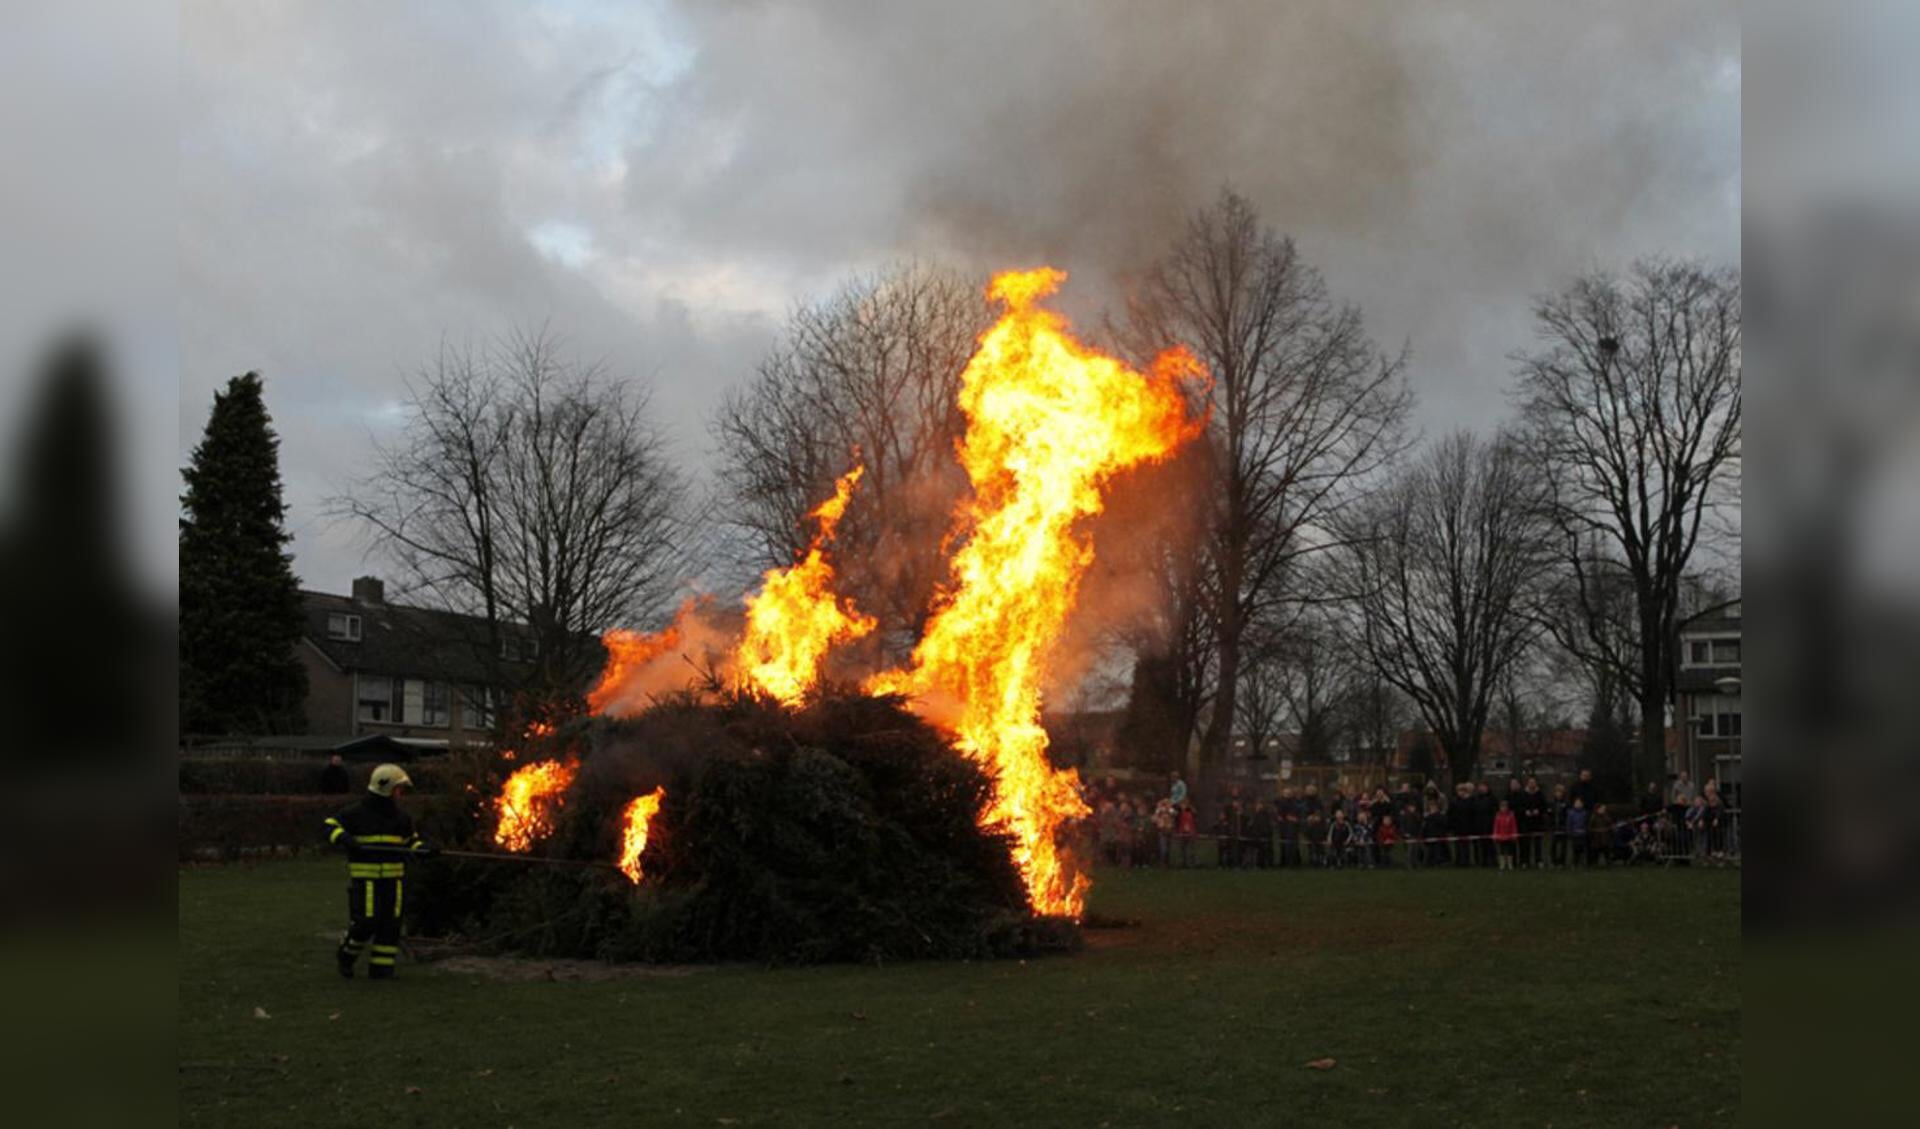 Kerstboomverbranding in Princenhage, 6 januari 2012. foto Ilse Lukken